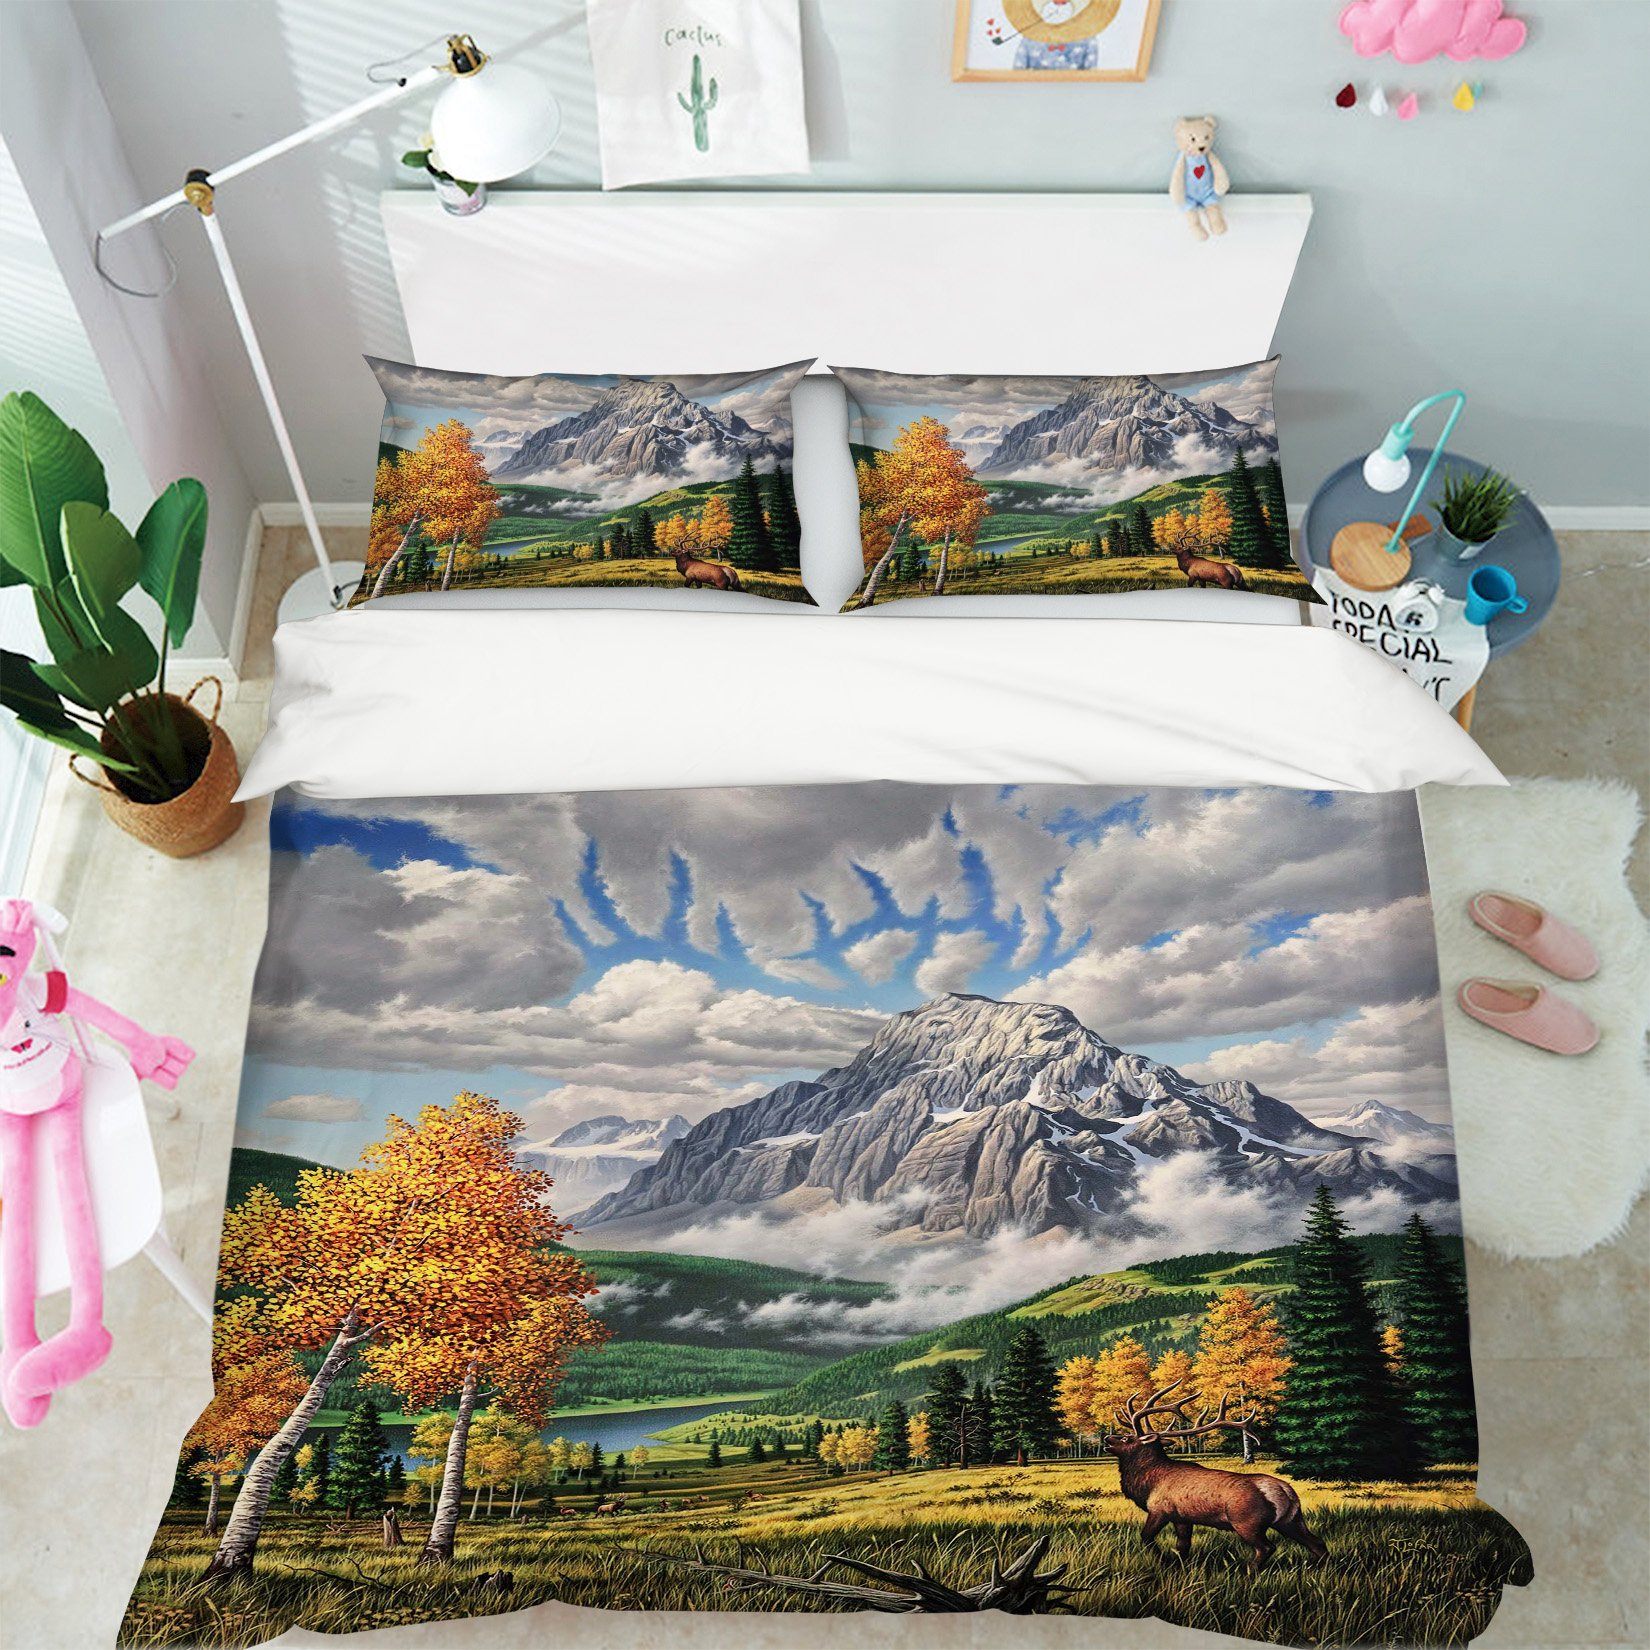 3D Autumn Echos 2112 Jerry LoFaro bedding Bed Pillowcases Quilt Quiet Covers AJ Creativity Home 